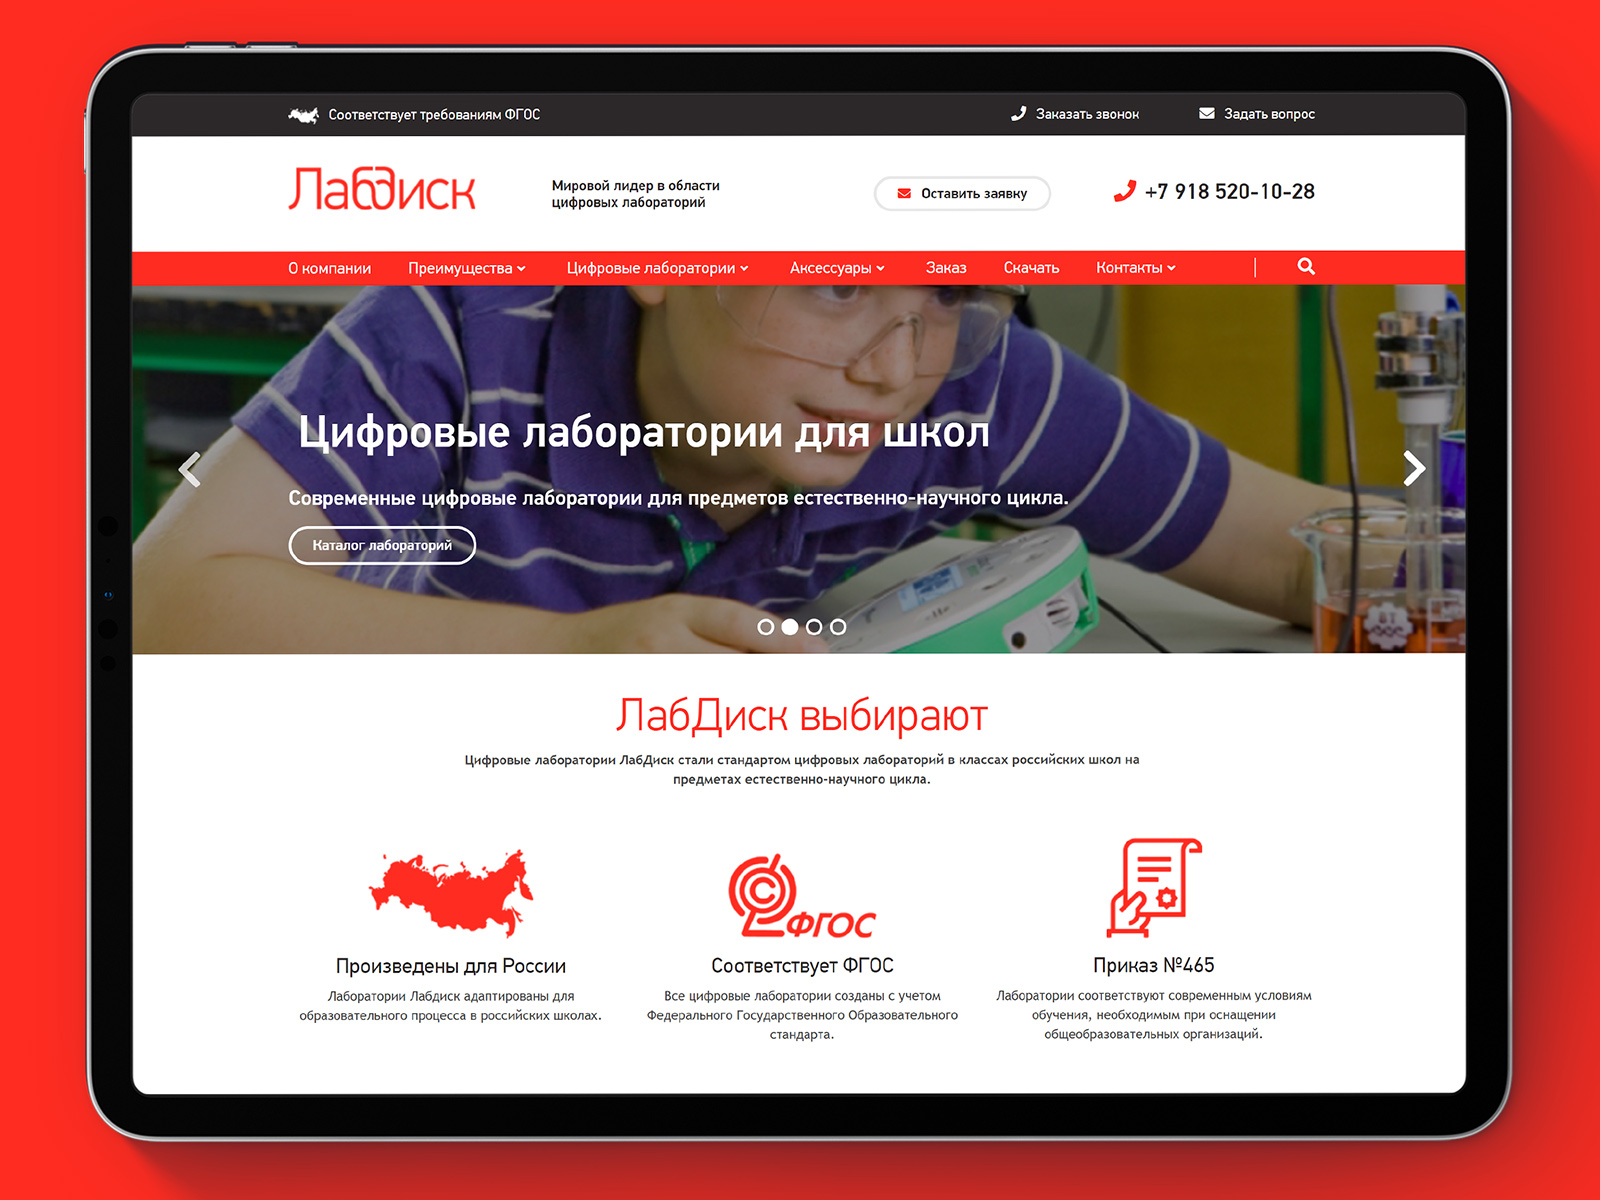 Corporate website of the representative of Globisens digital laboratories